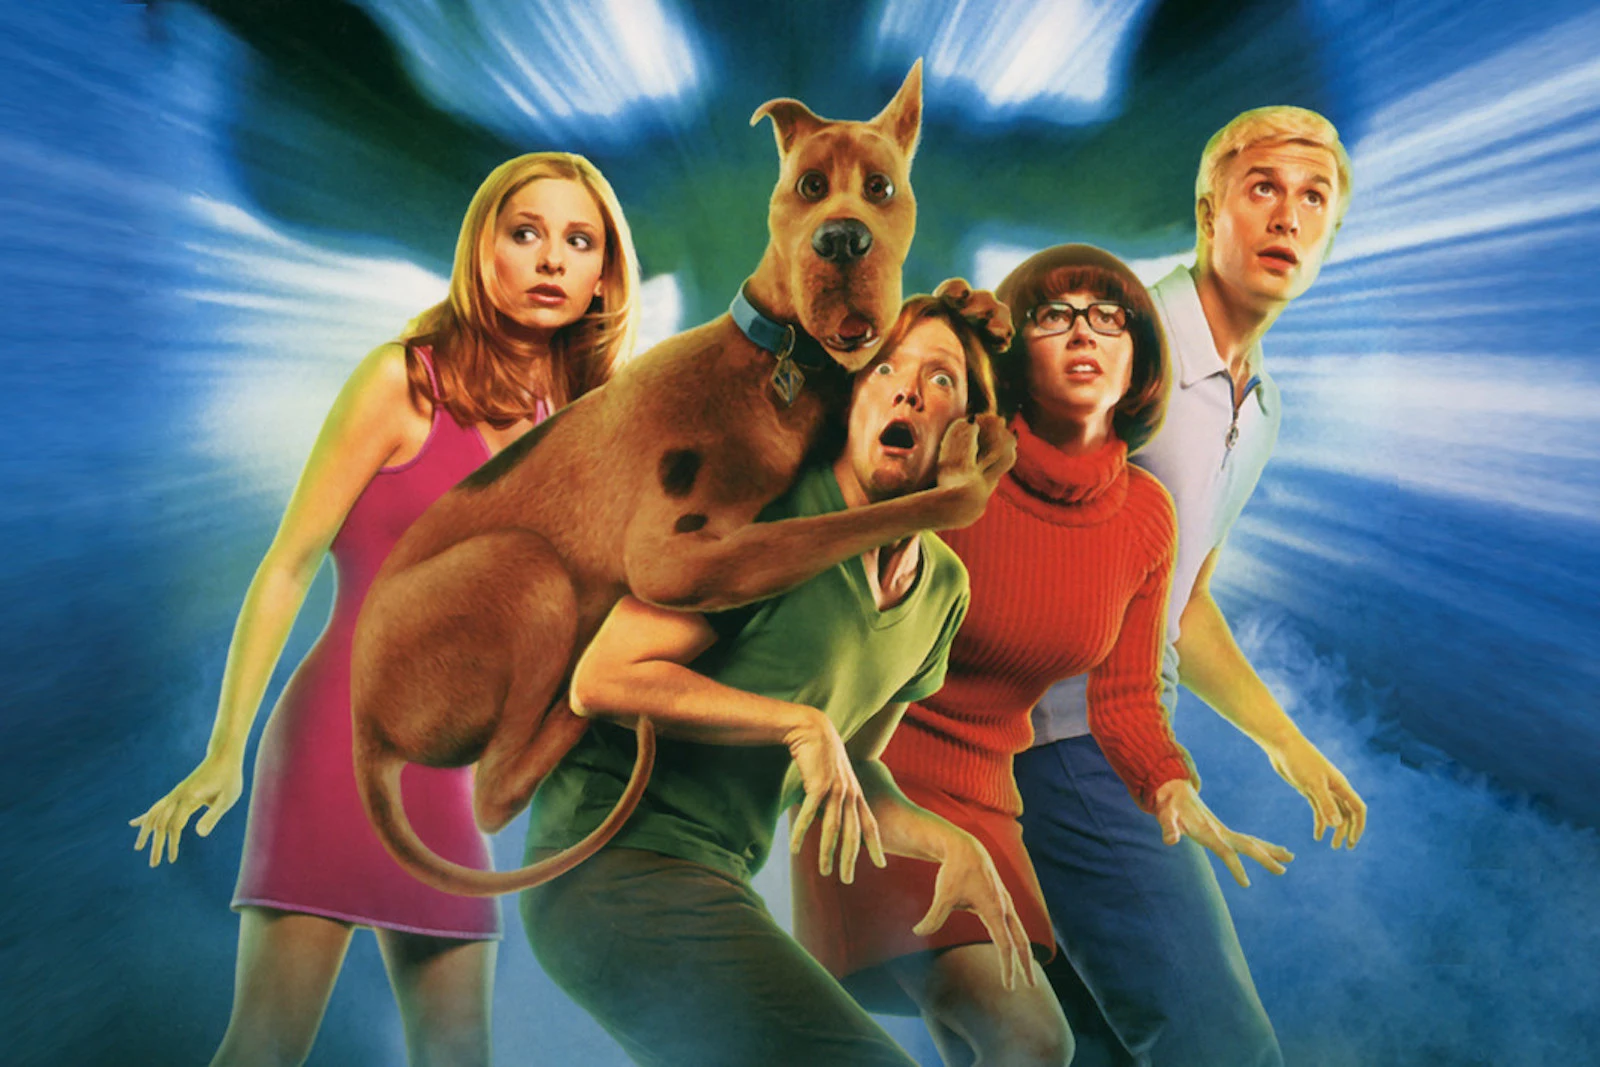 James Gunn's 'Scooby-Doo' Was Originally an R-Rated Movie